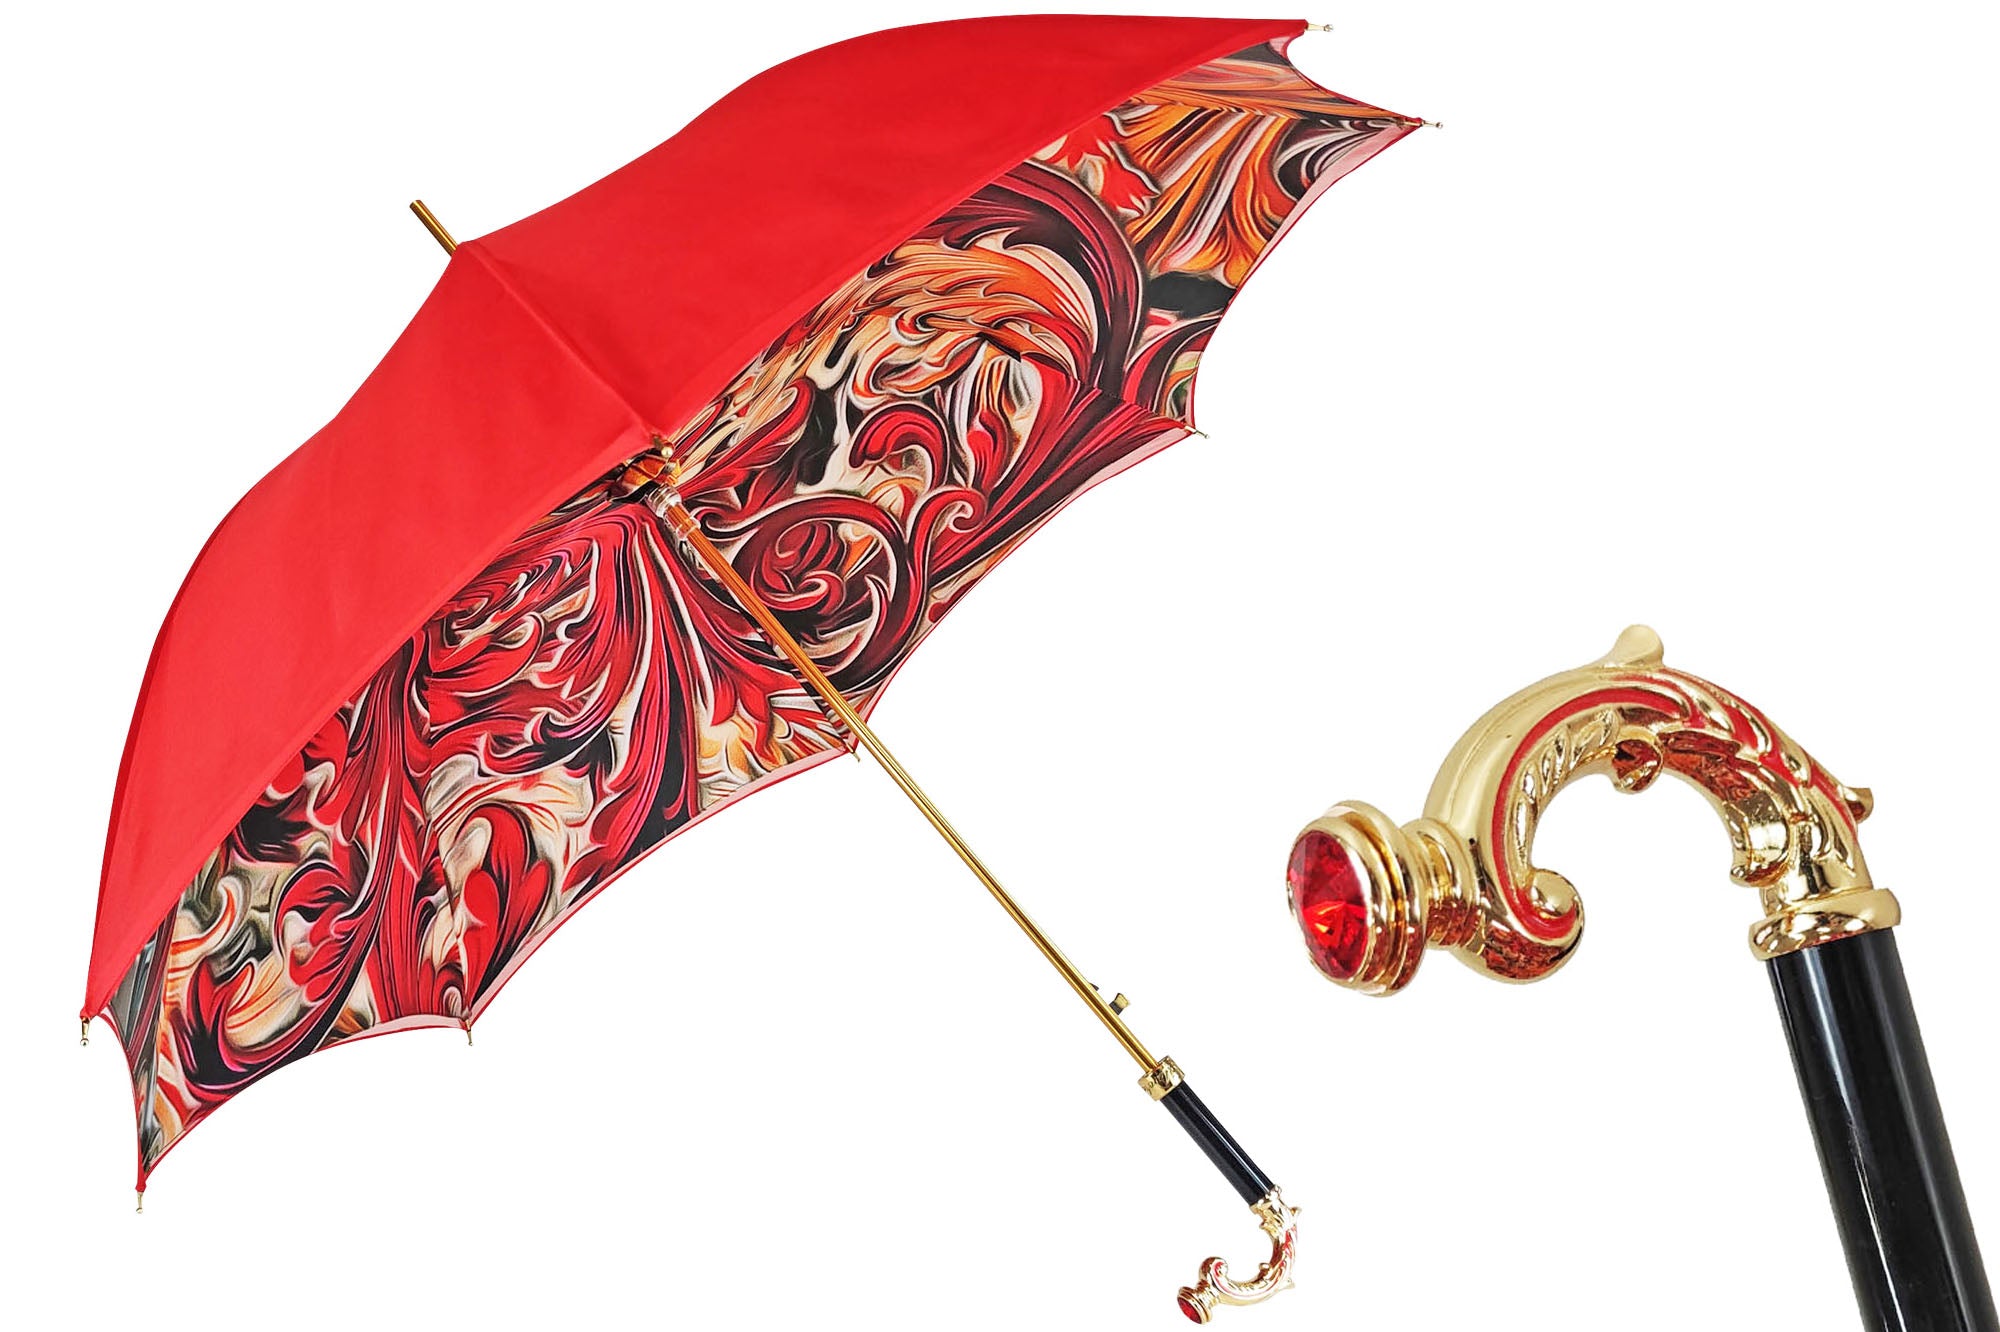 Bright red umbrella